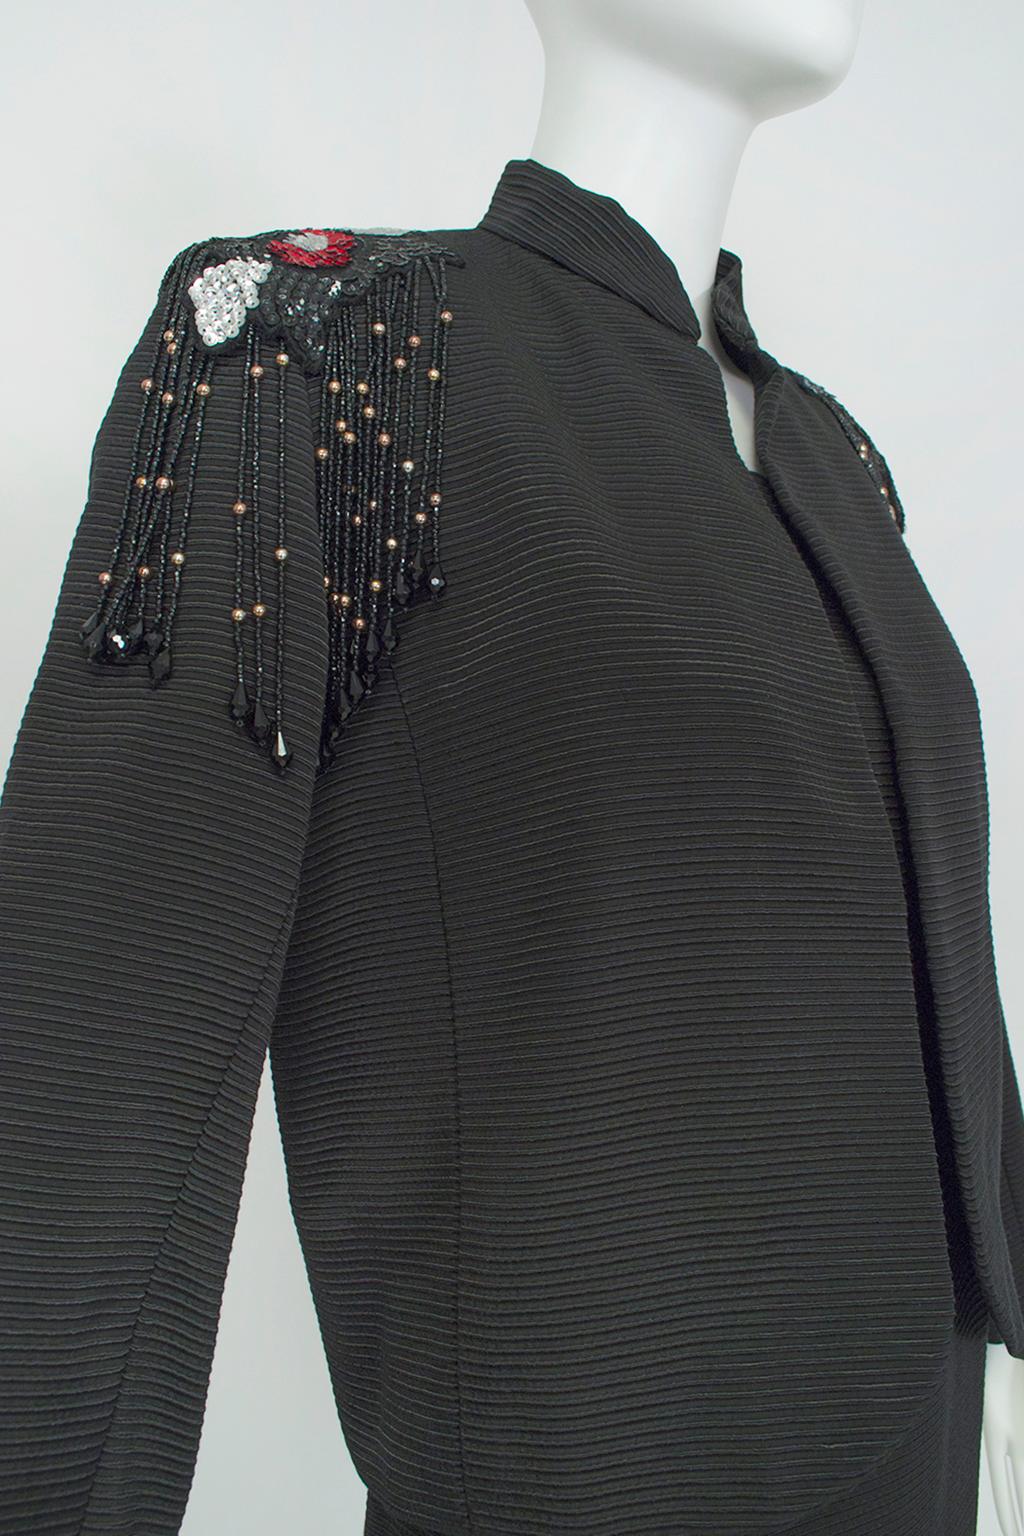 Emilio Schuberth Extravagant Black Fringe Shoulder Dress Suit - M, 1960s For Sale 1